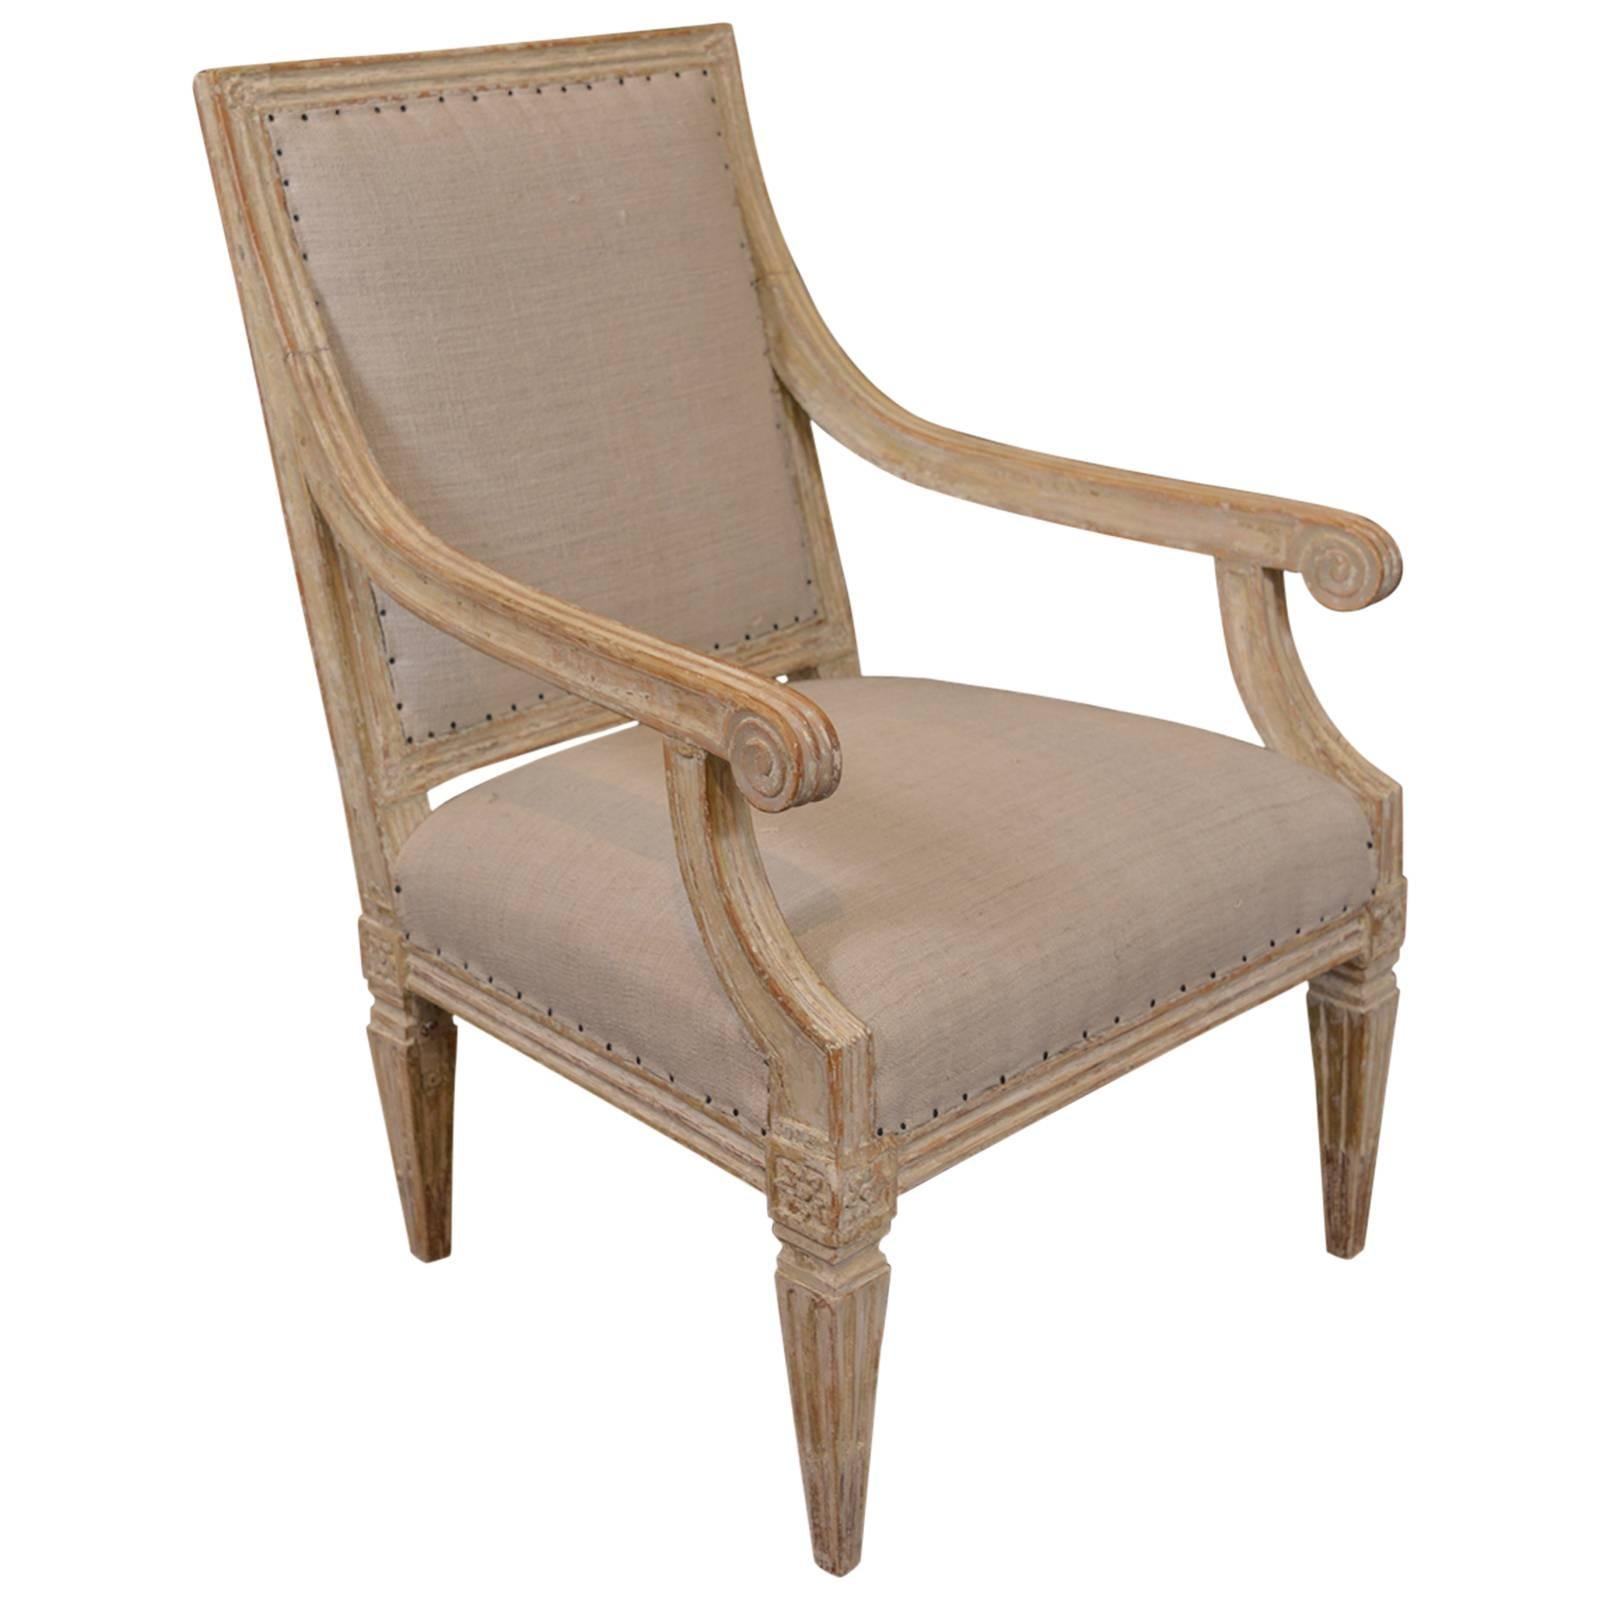 Single Swedish Chair For Sale